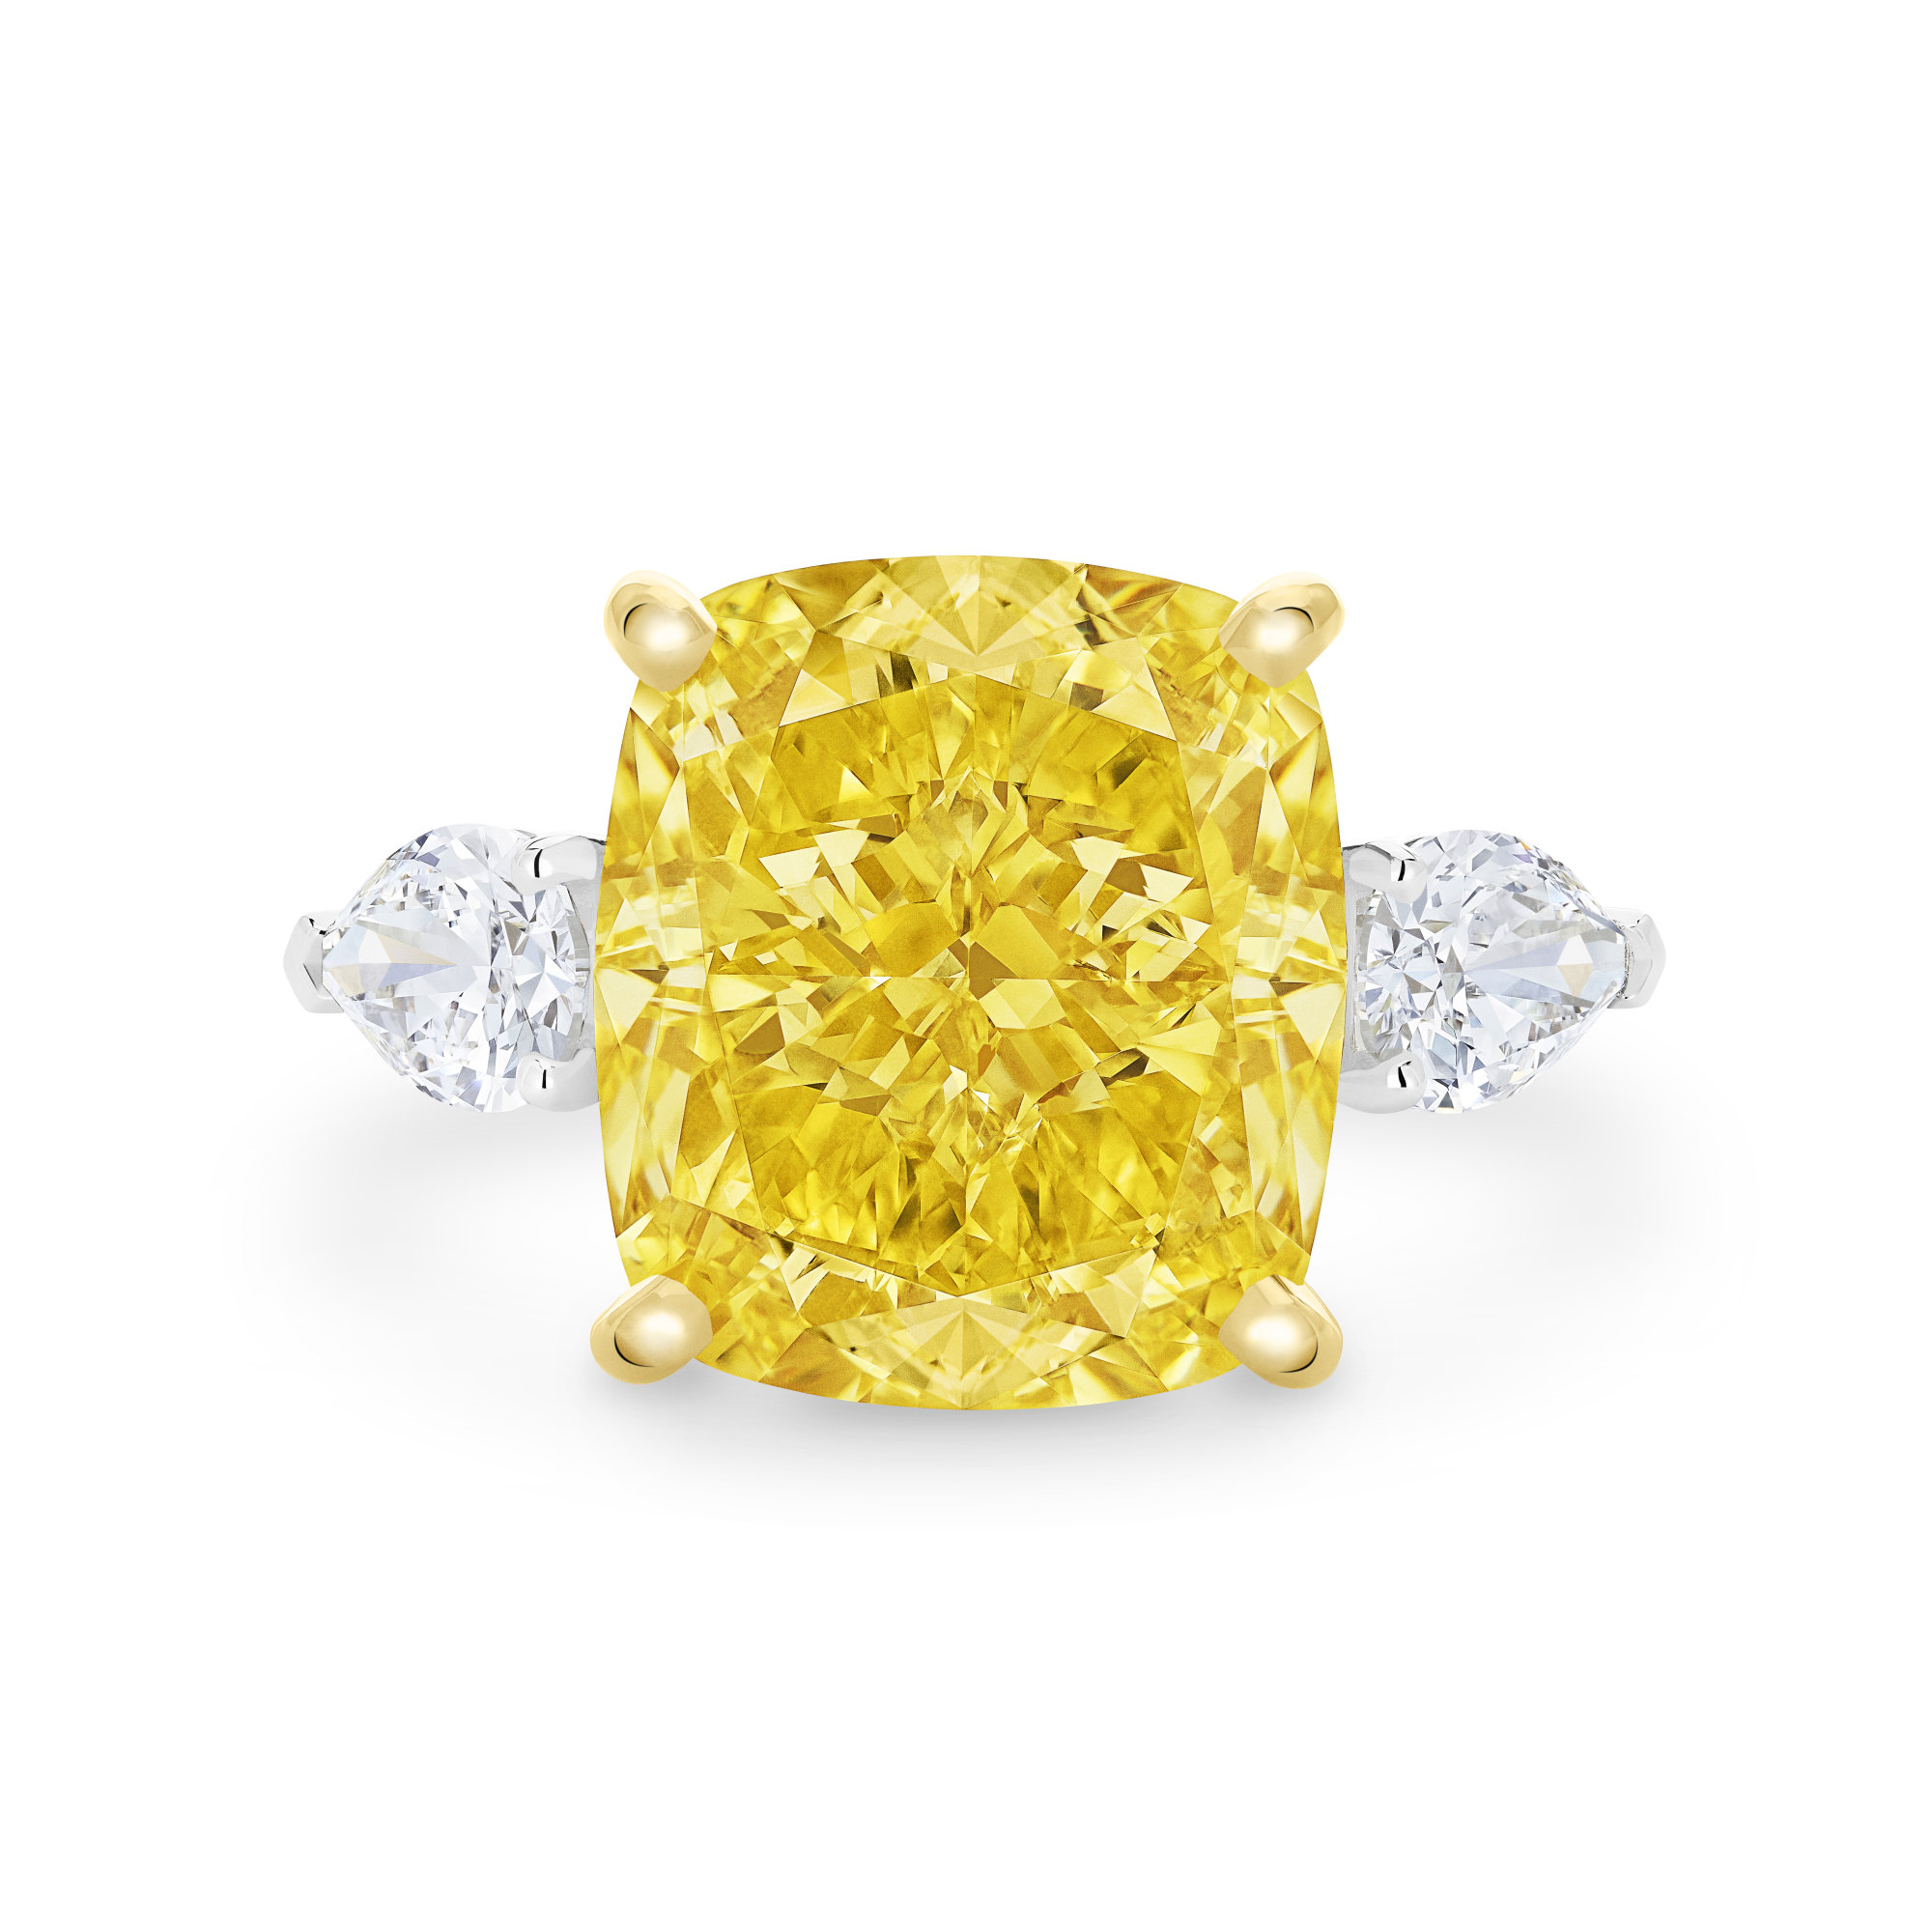 Yellow Diamonds Shine Bright At The Paris High Jewelry Previews